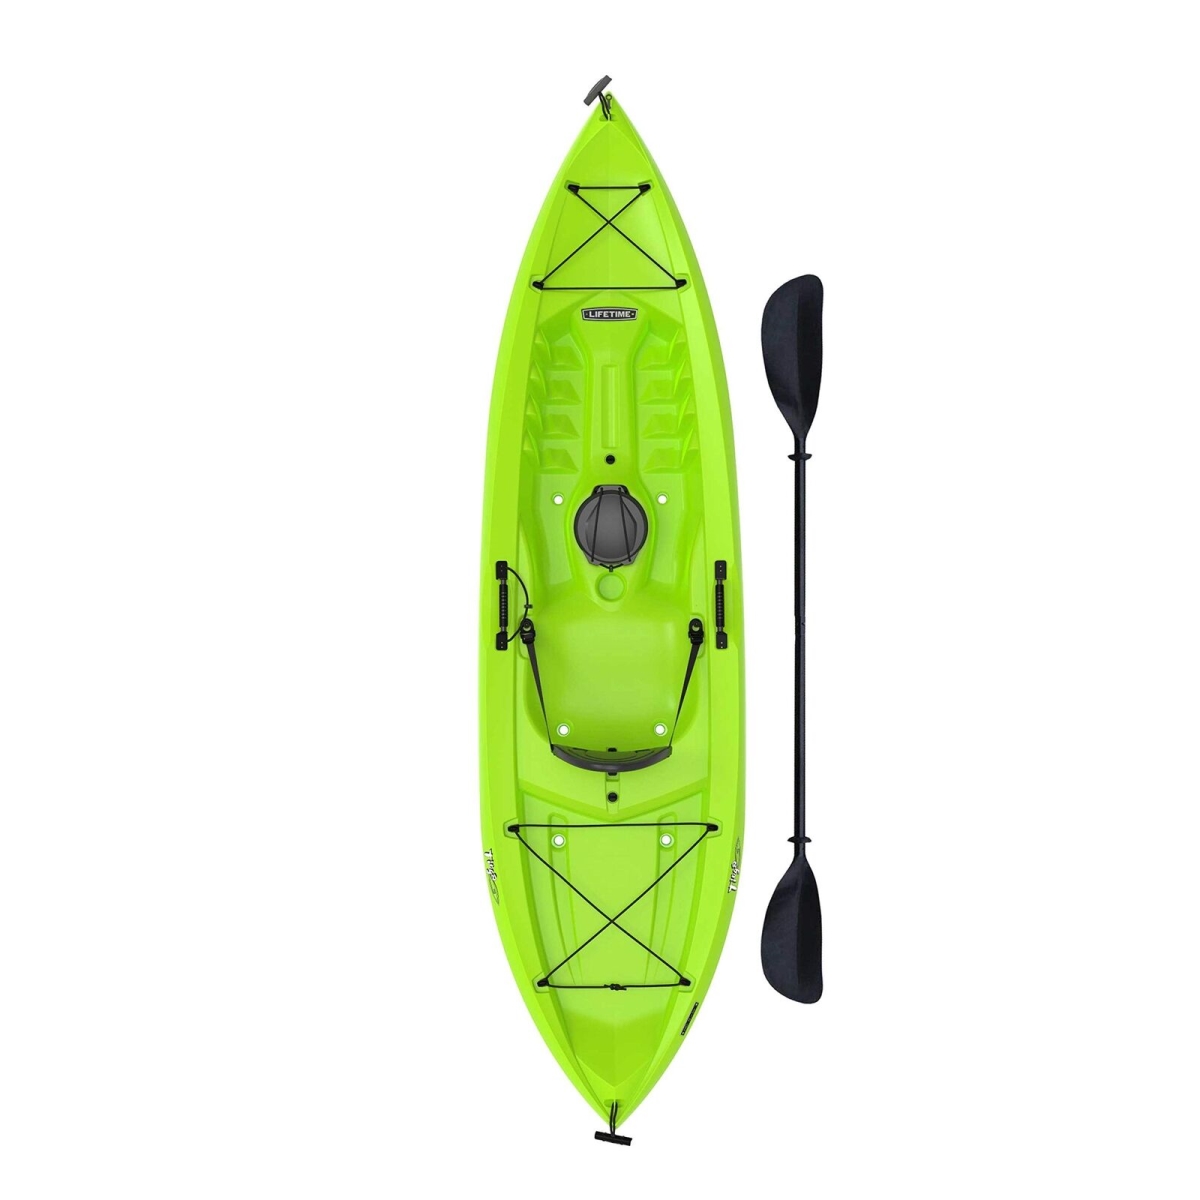 LFT90534 Tioga 100 Sitontop Kayak, Lime Green -  LIFETIME